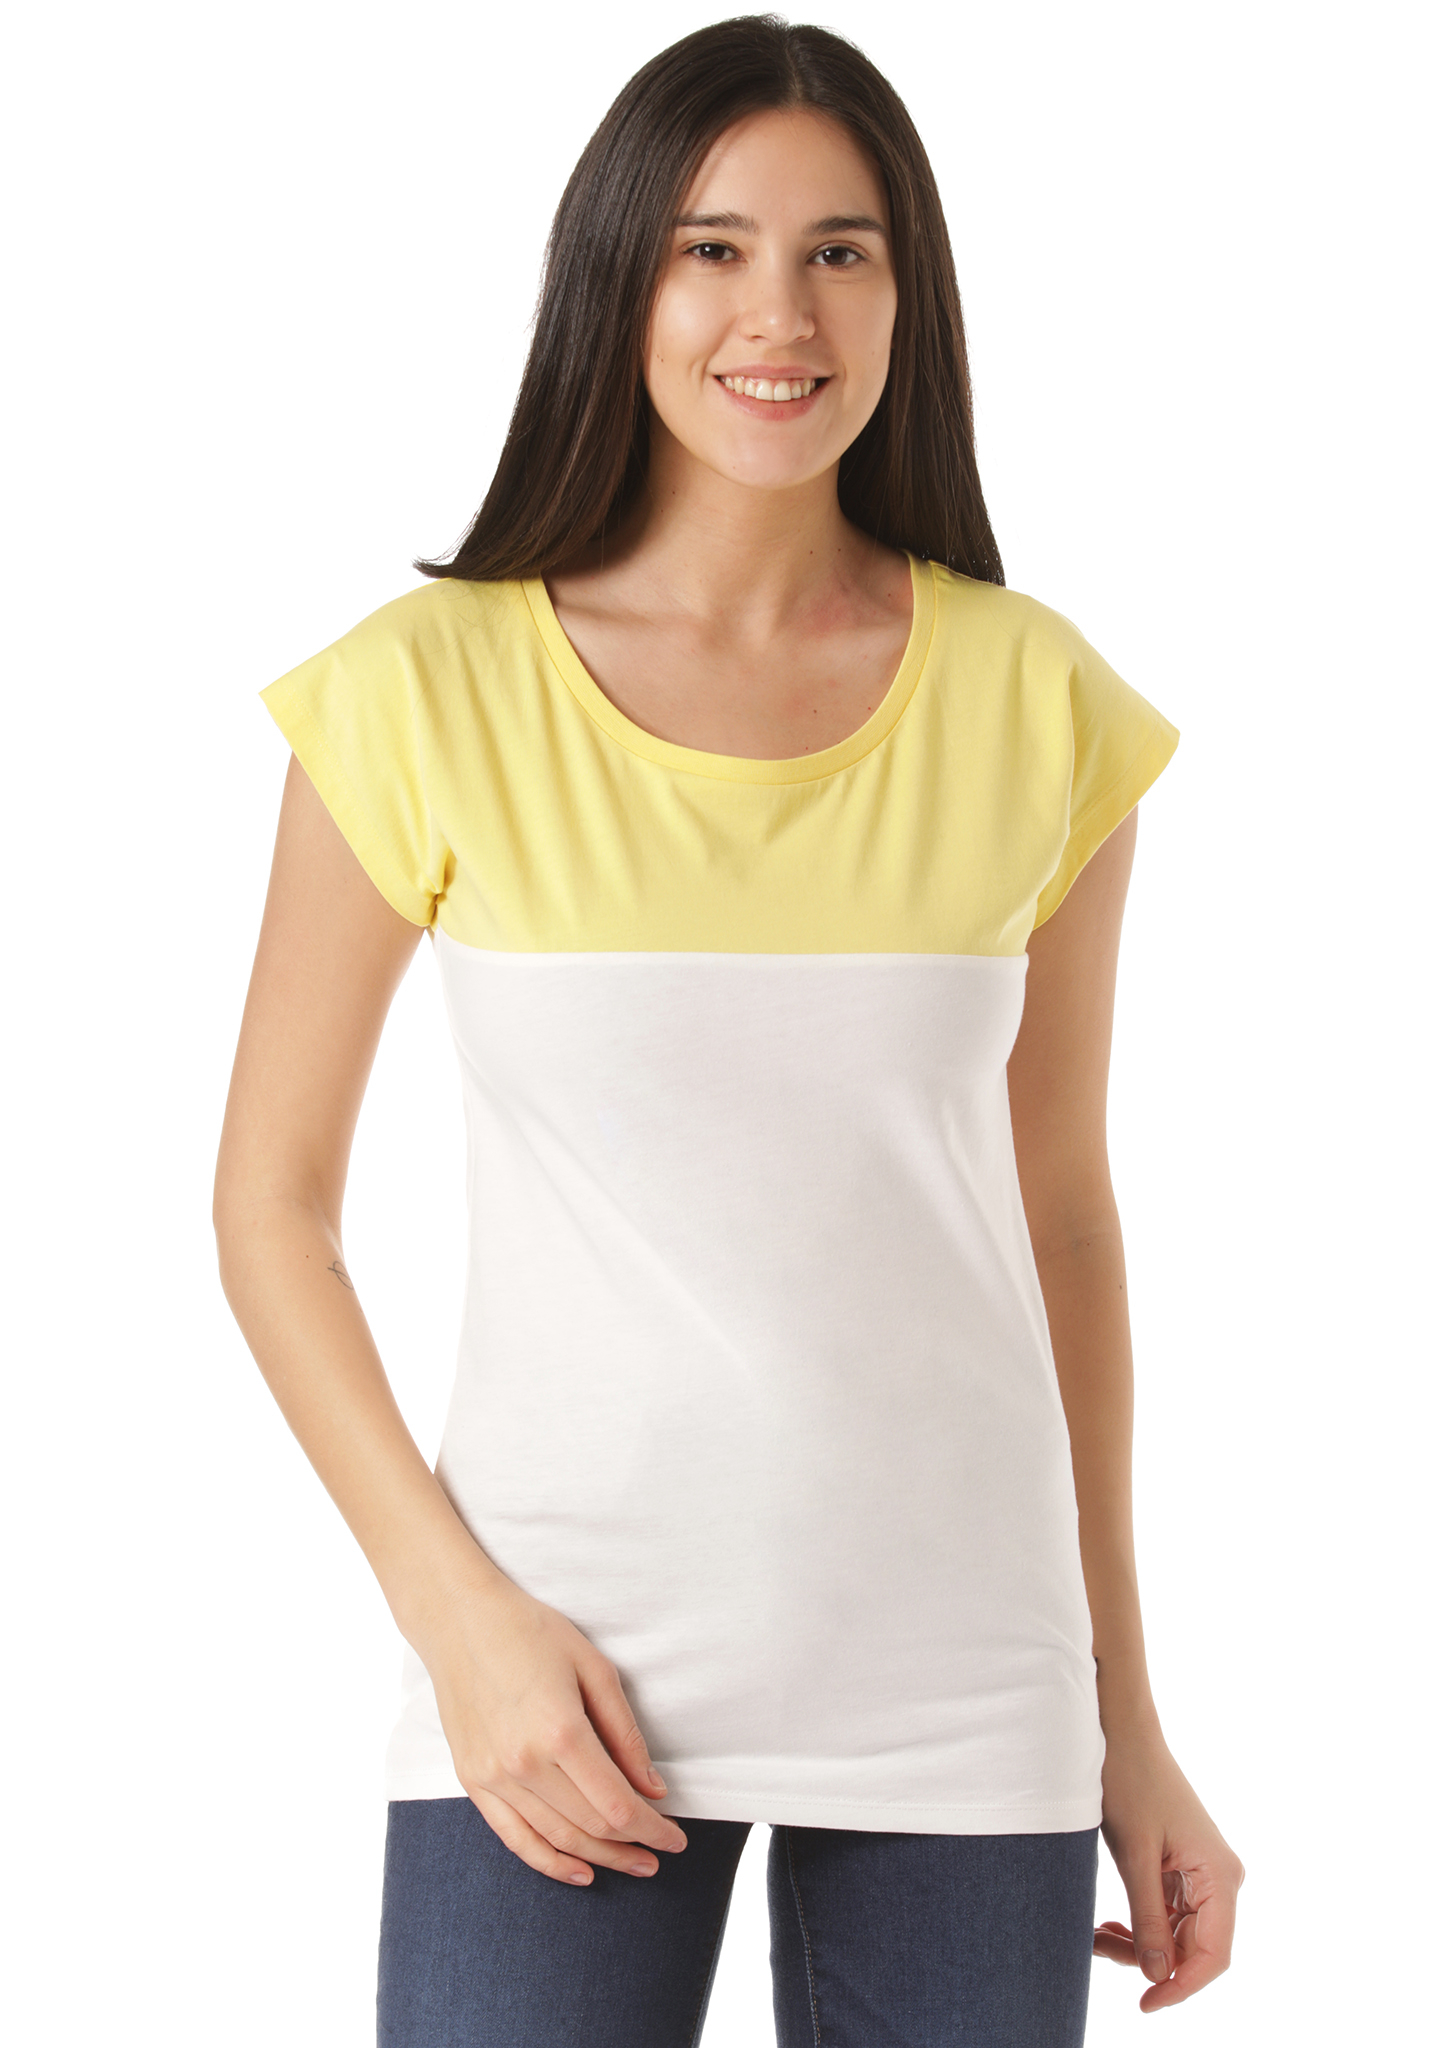 Lakeville Mountain Kapatu T-Shirt lemonade/white XL